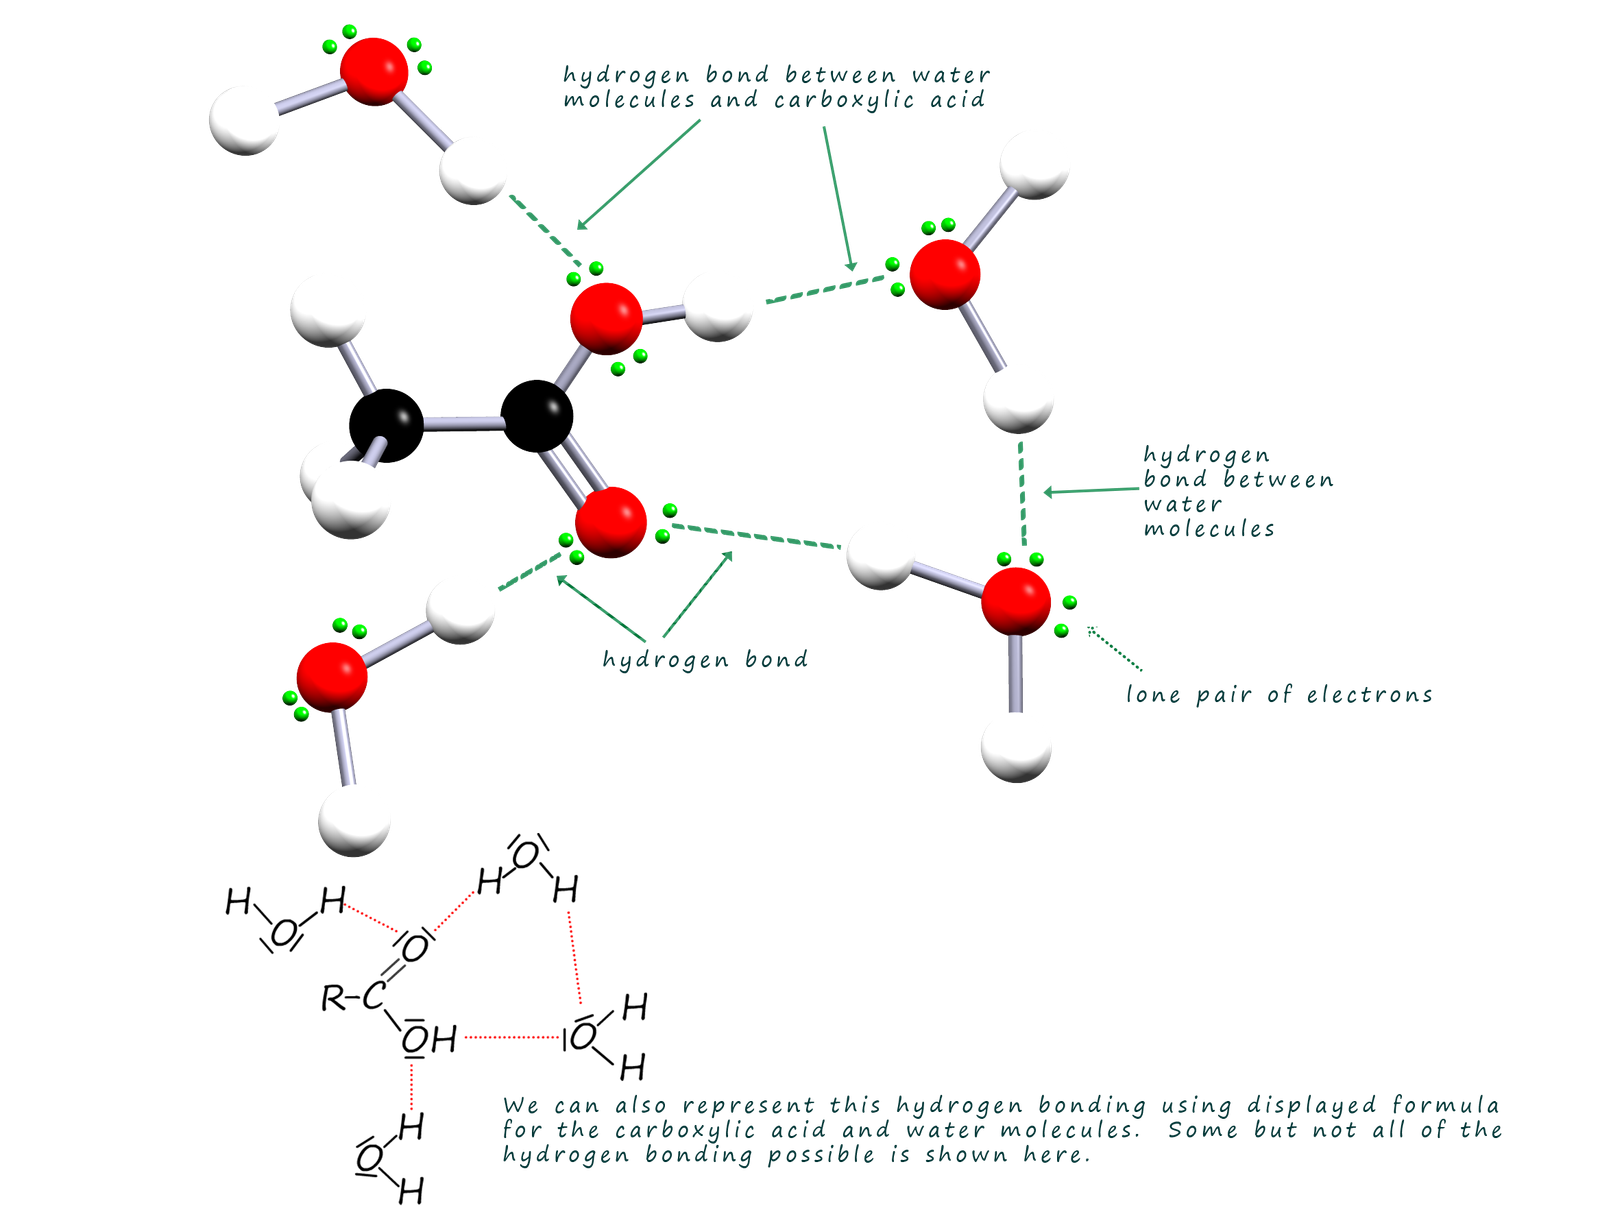 hydrogen bonding between carboxylic acids and water molecules